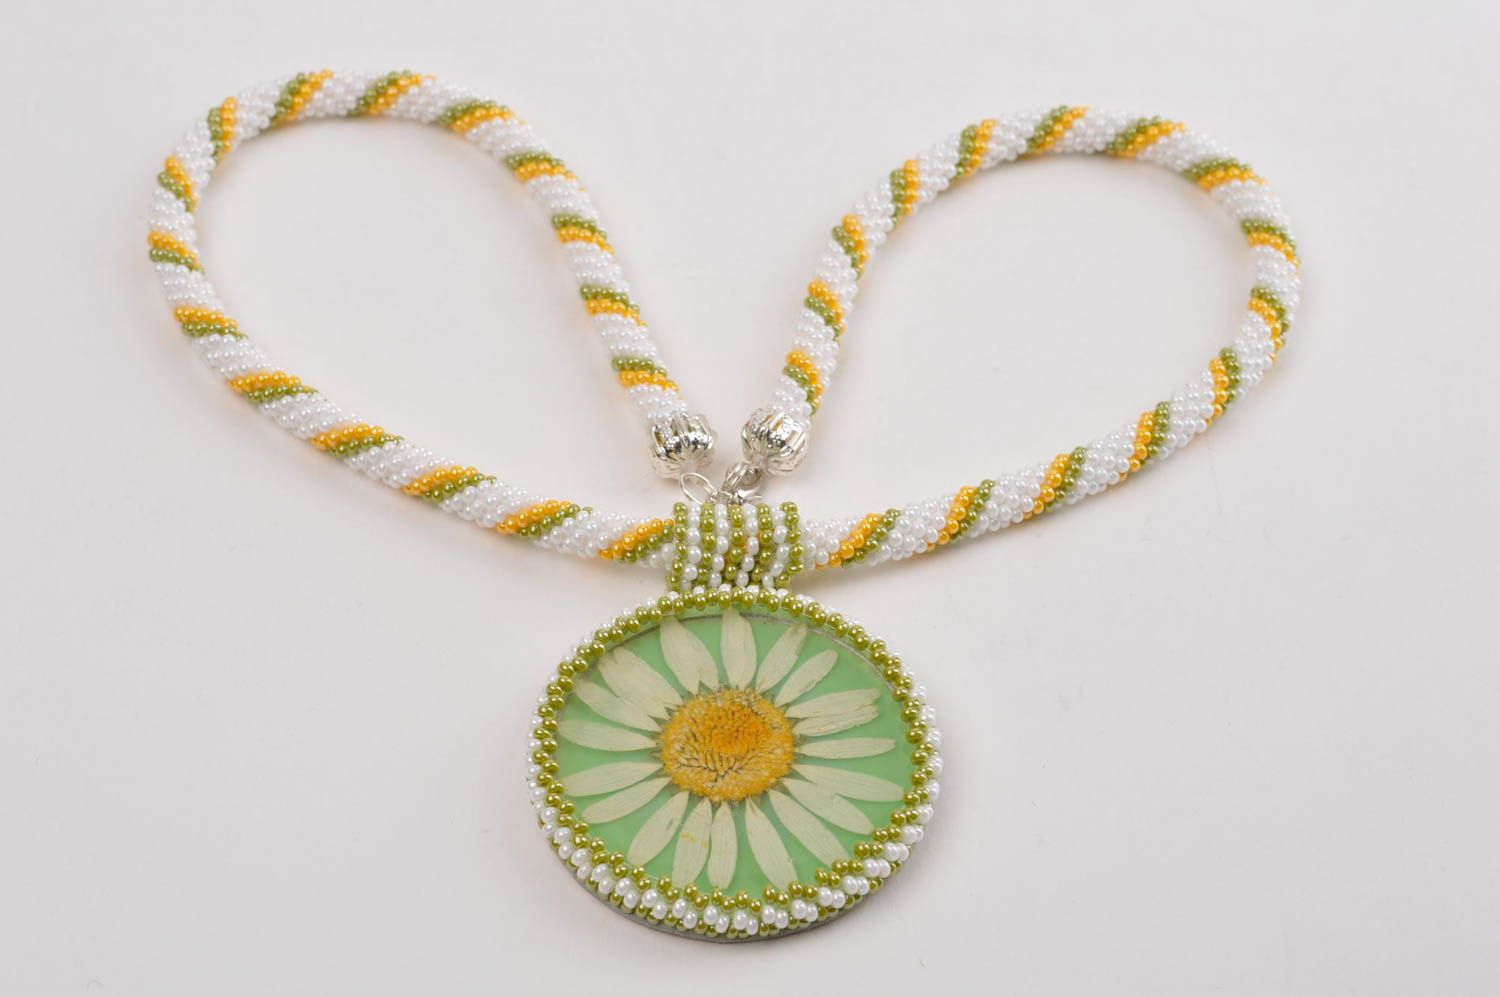 Handmade pendant unusual accessory bead necklace gift ideas resin jewelry photo 2